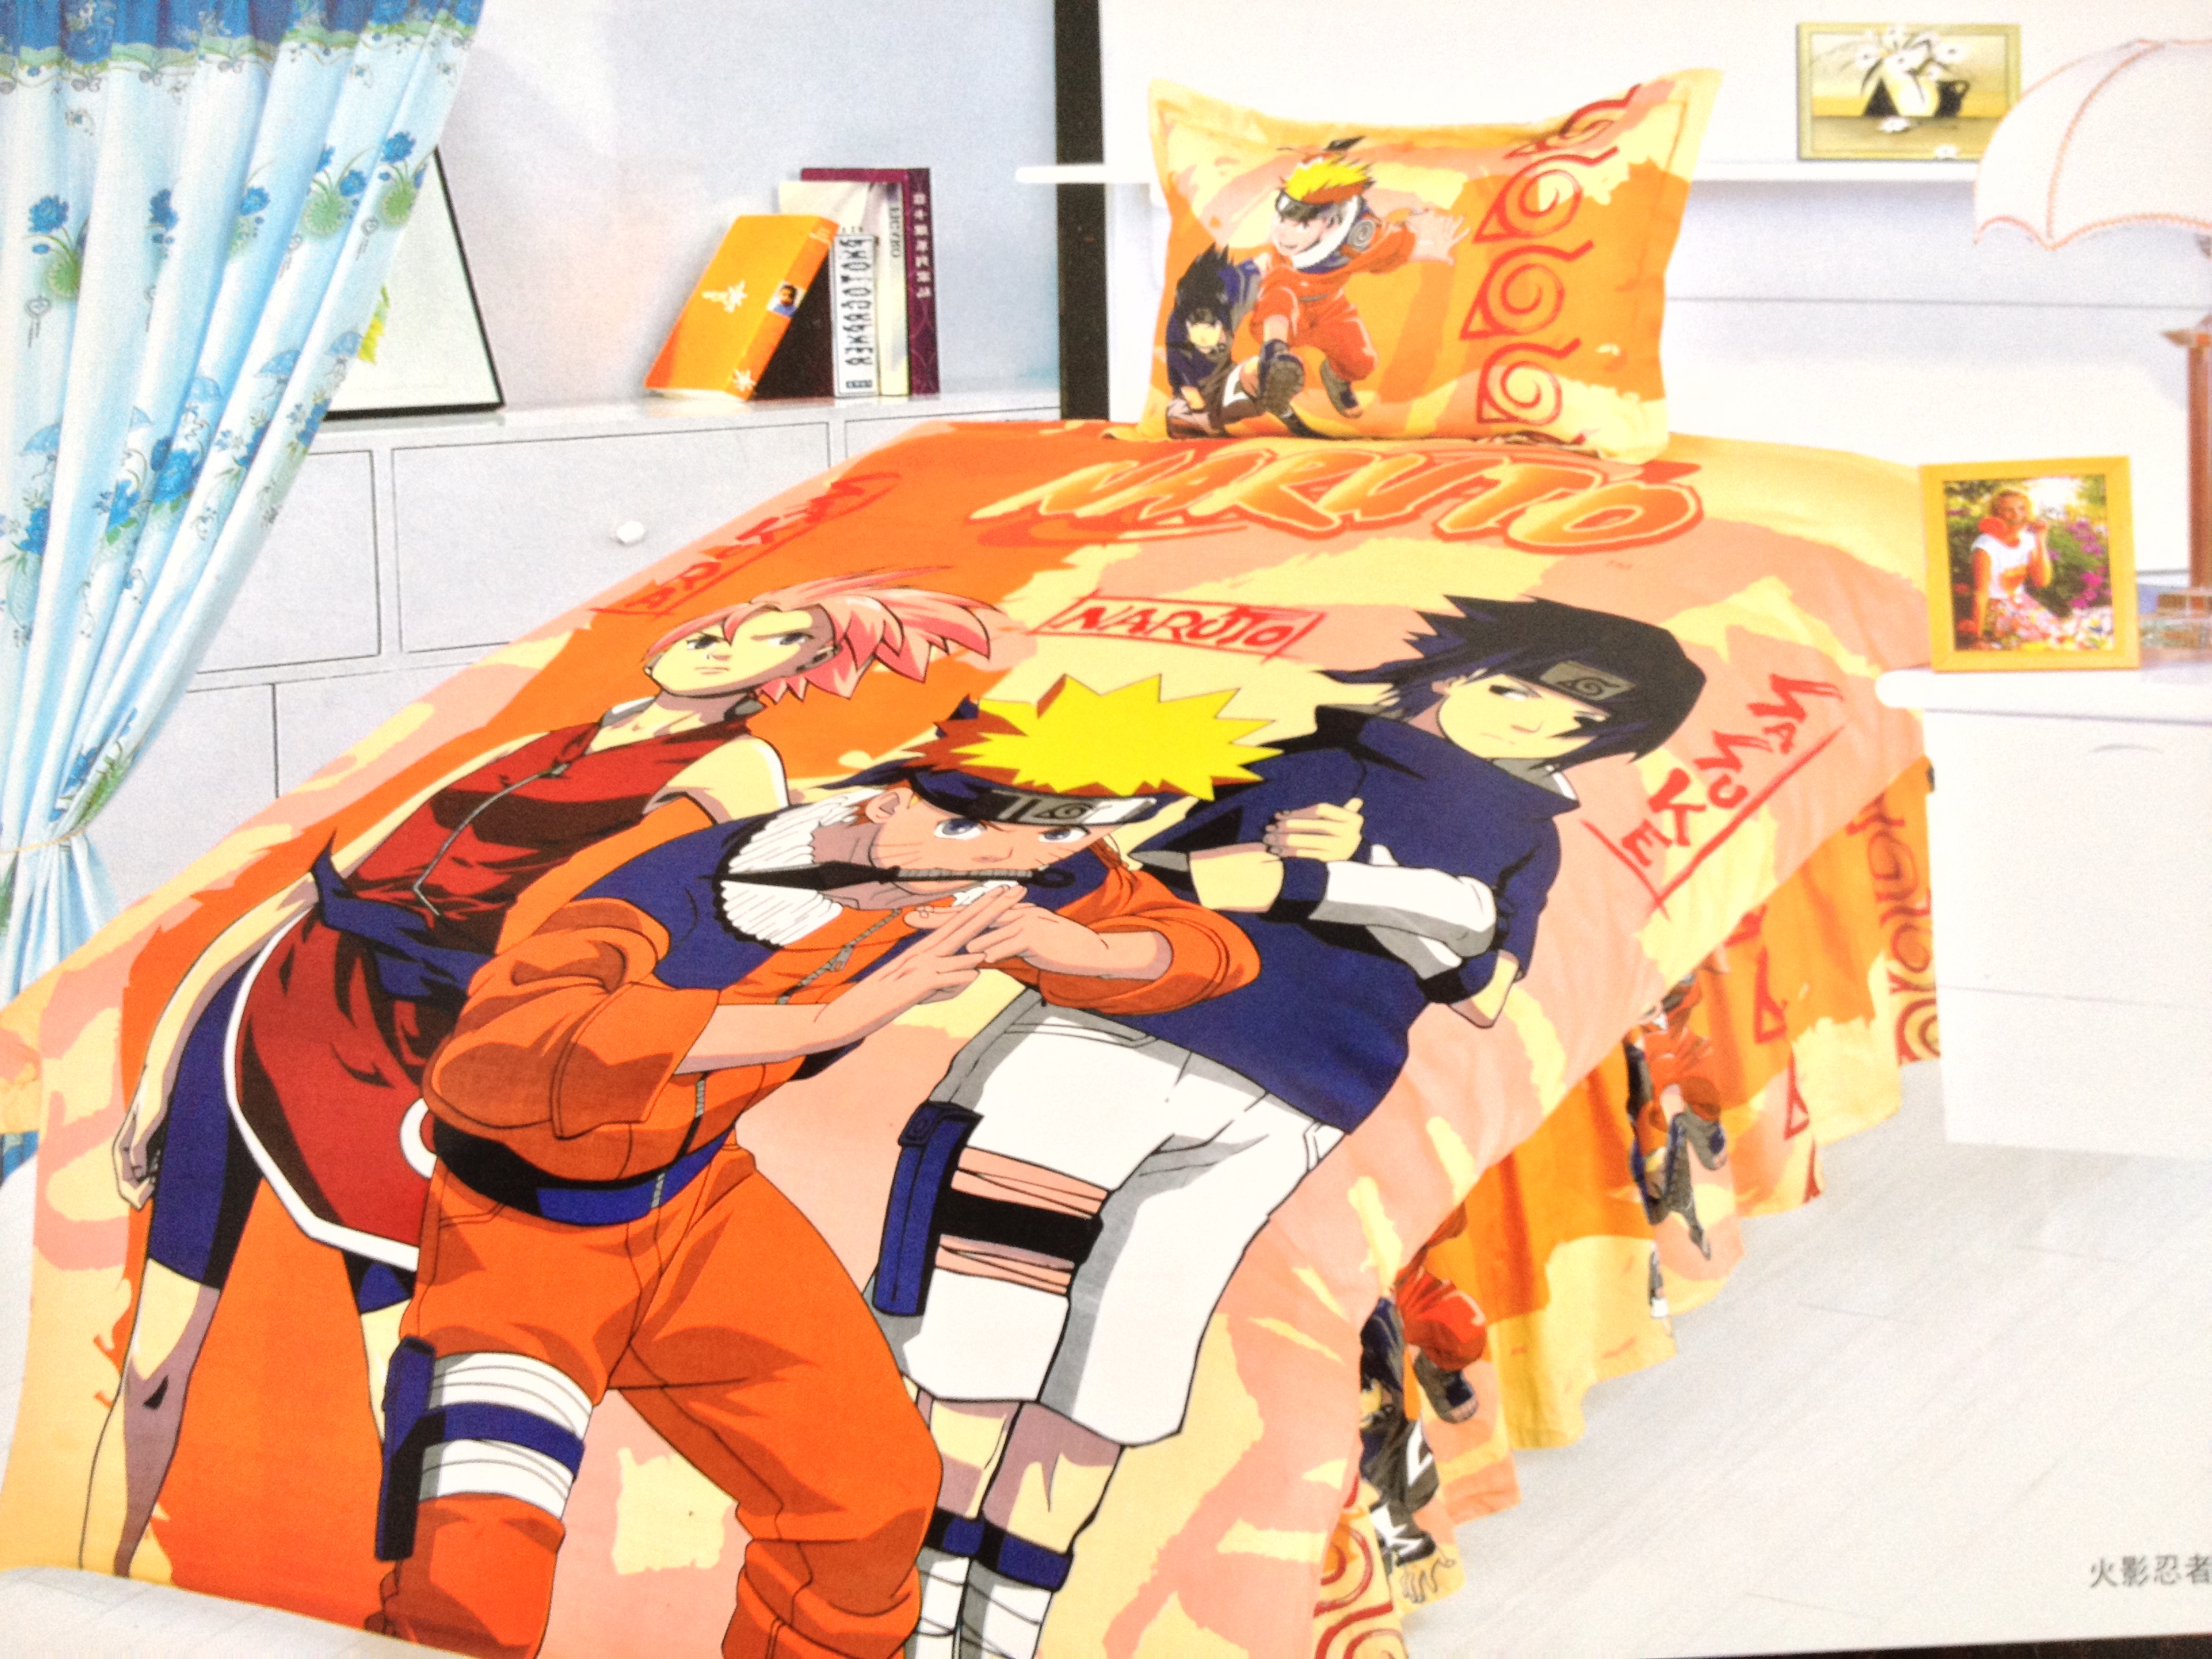 Naruto Child cartoon bedding 100% cotton cartoon piece set activity ...